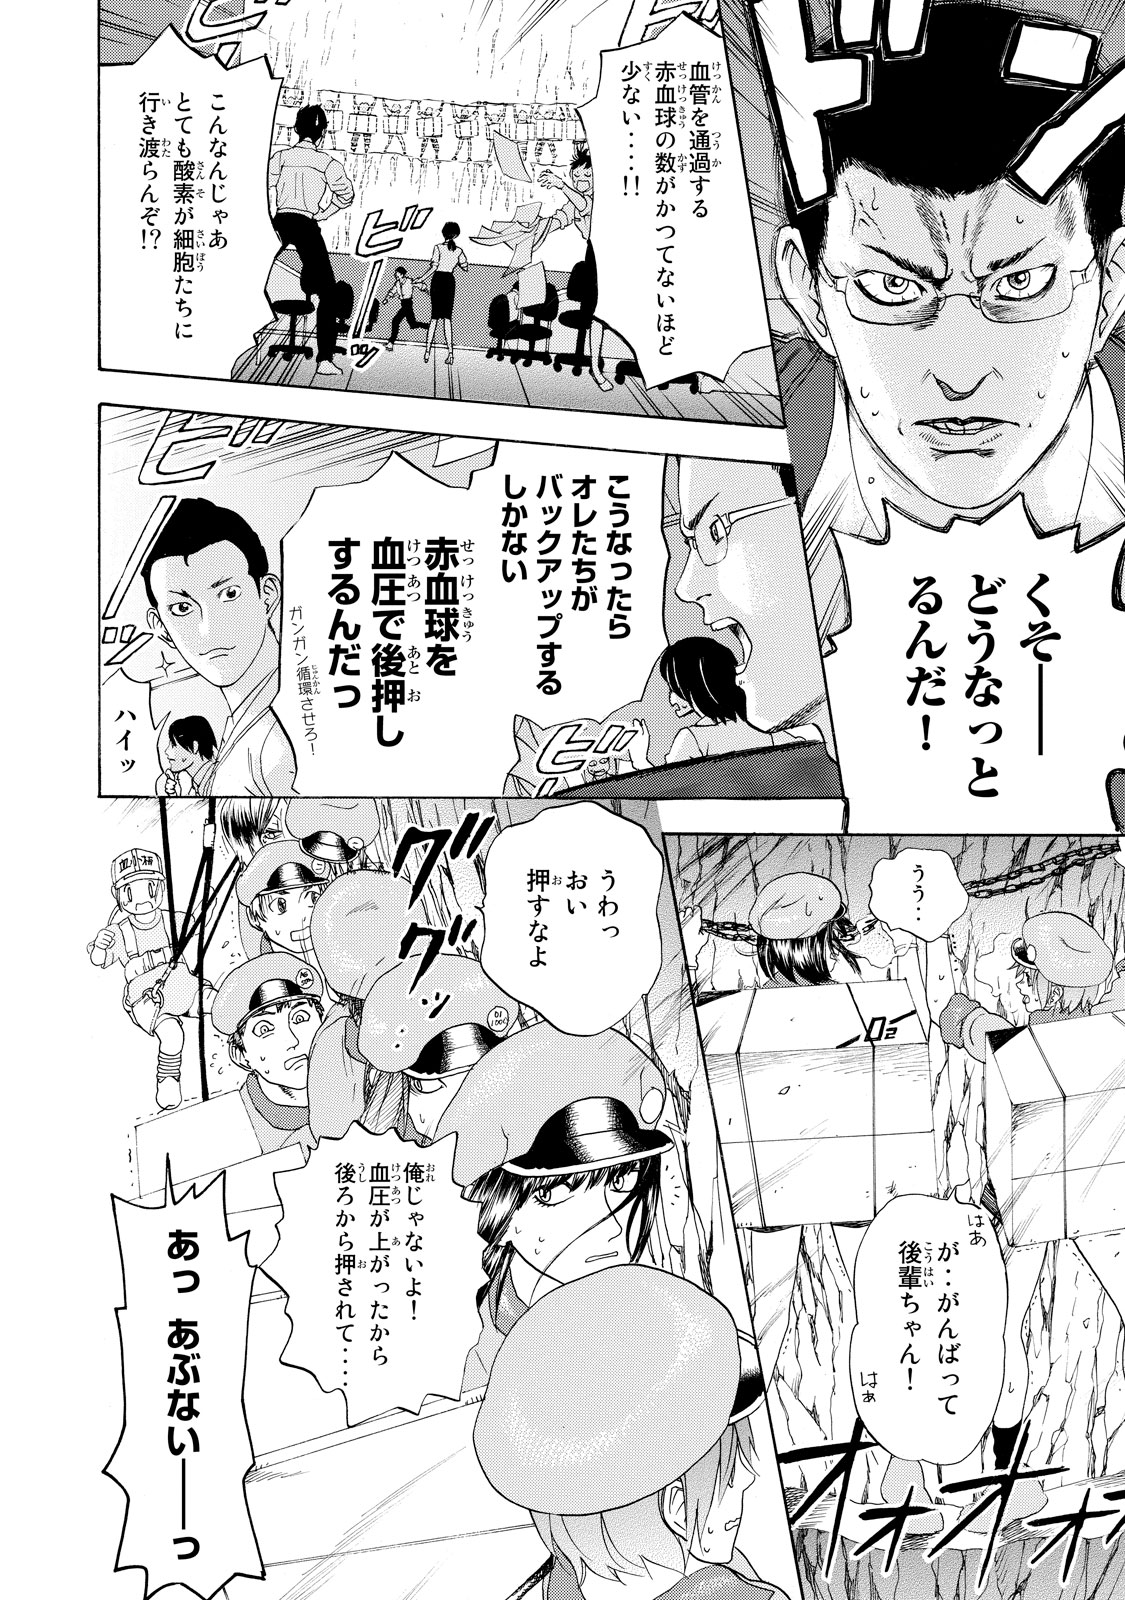 Hataraku Saibou - Chapter 18 - Page 8